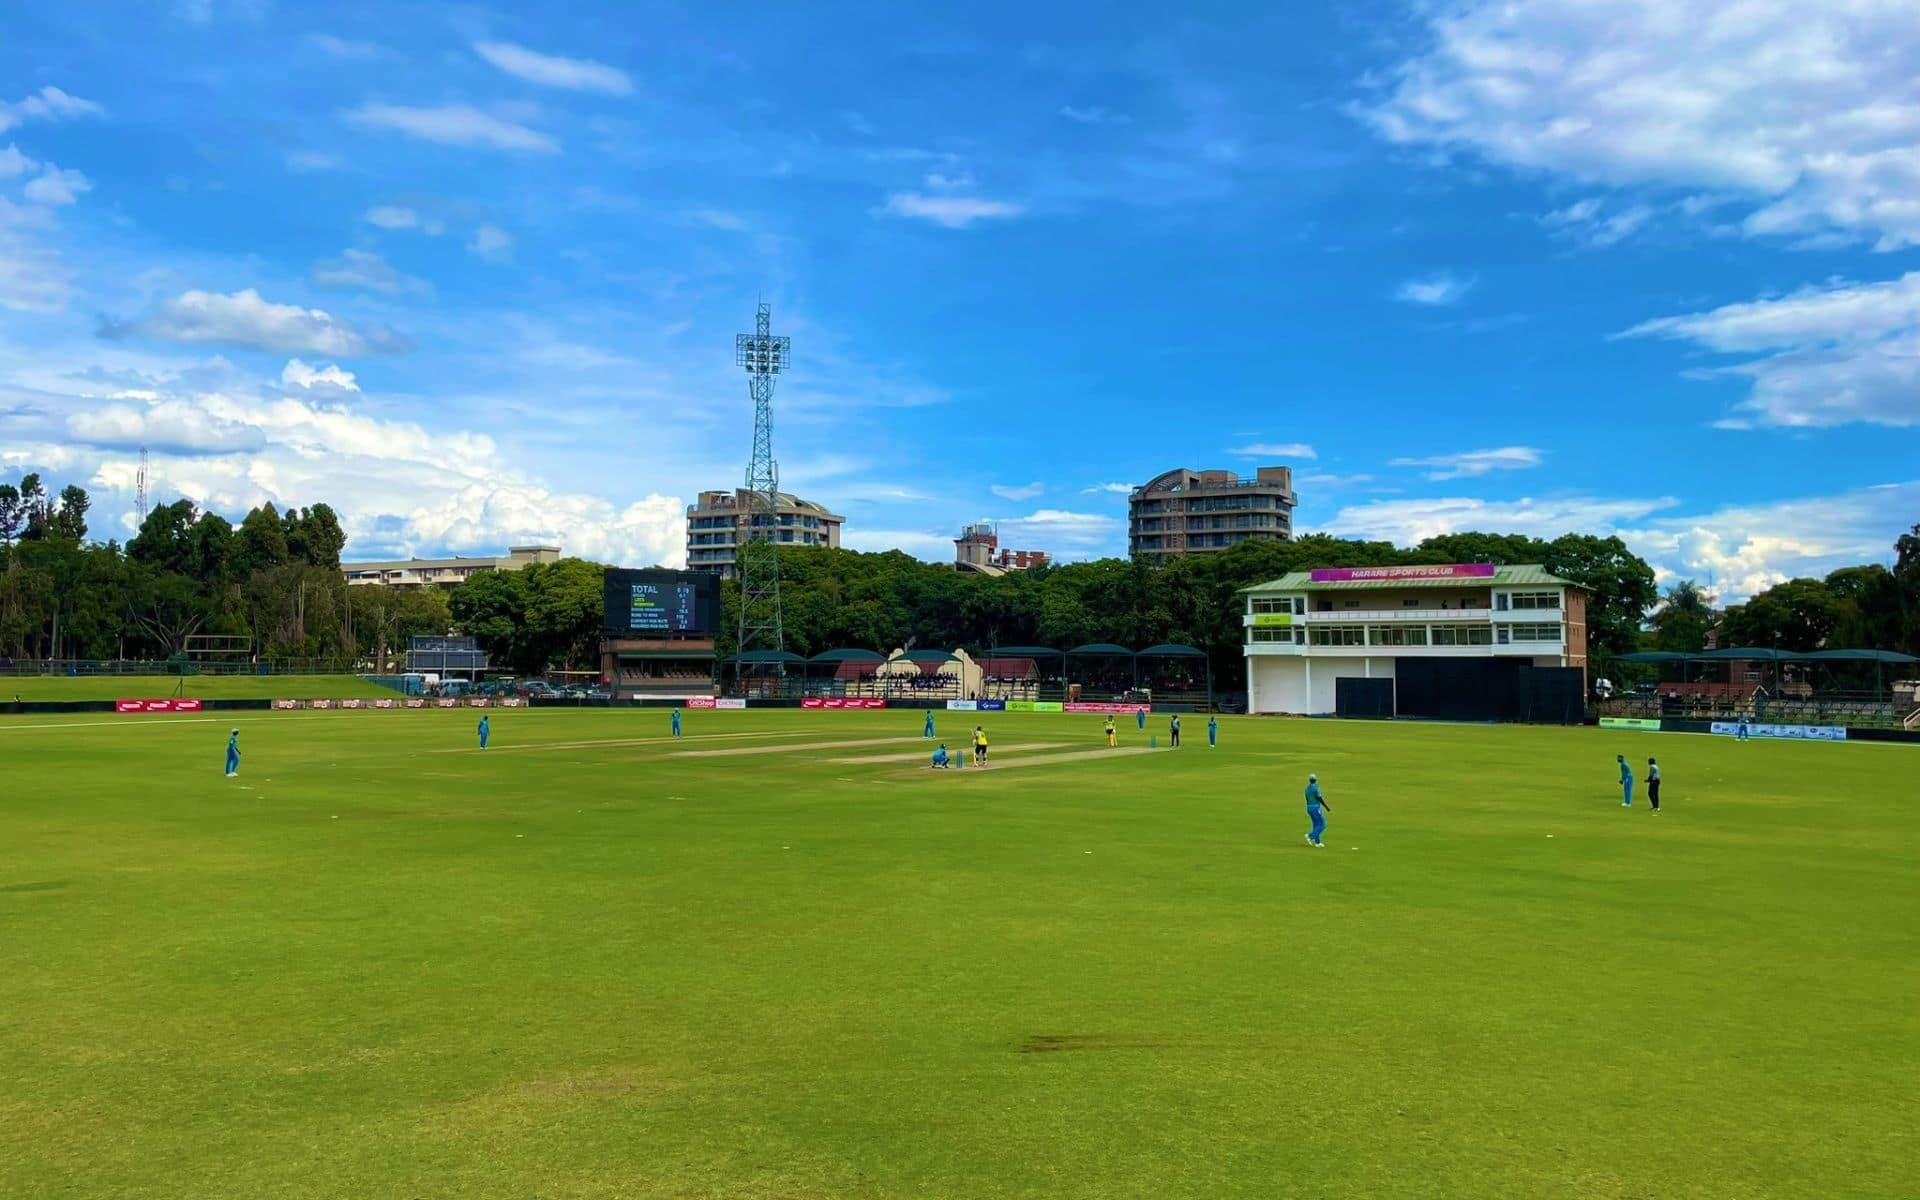  ज़िम्बाब्वे vs भारत, पहला T20i; हरारे स्पोर्ट्स क्लब की पिच रिपोर्ट